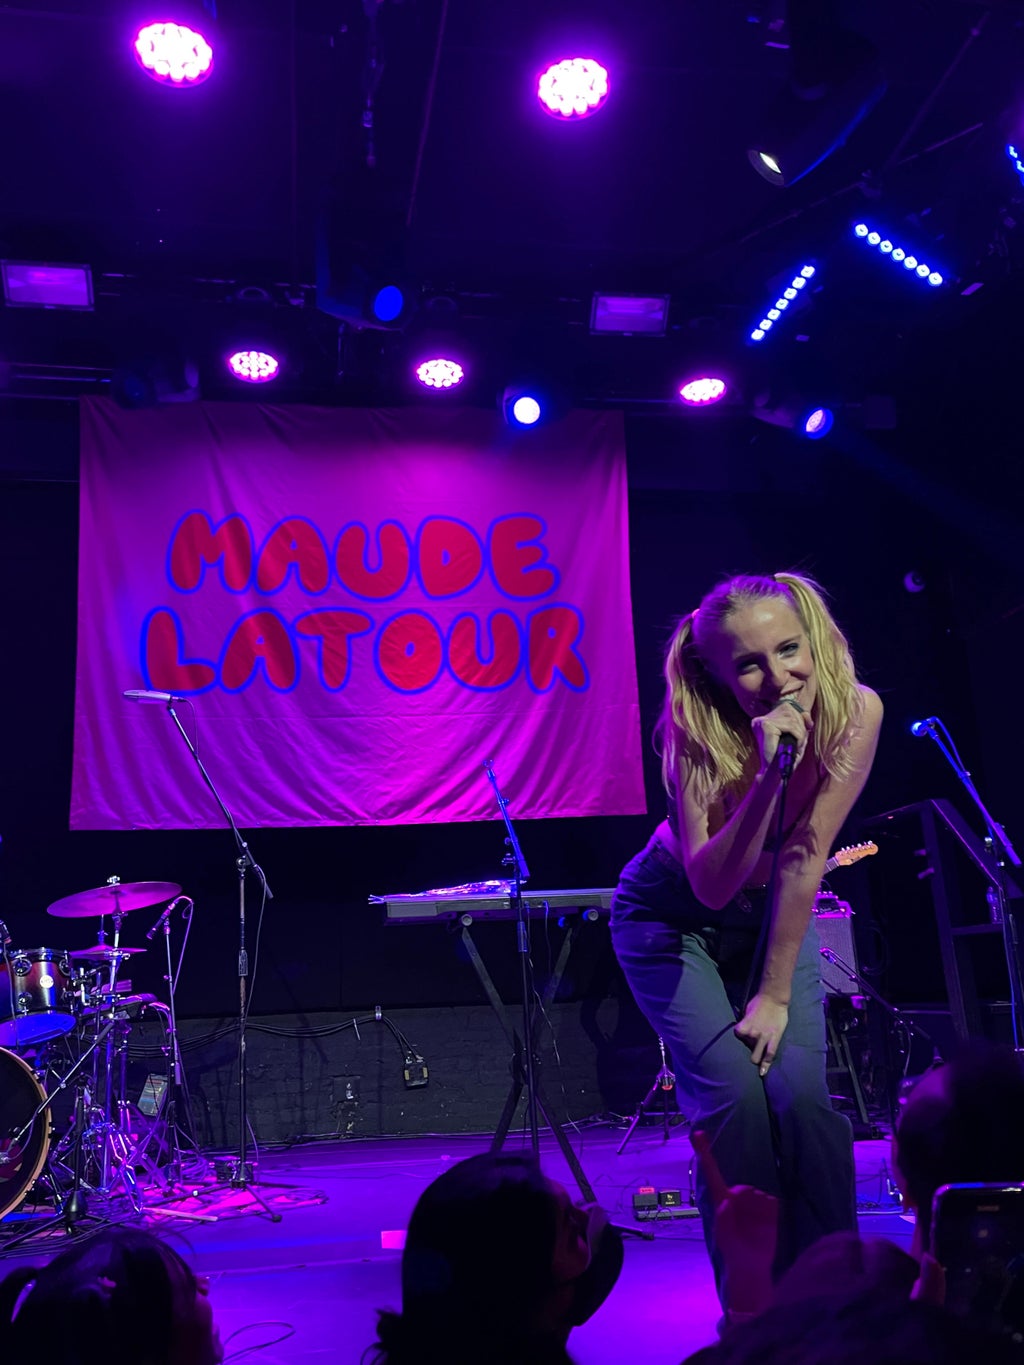 Maude Latour performing at her concert